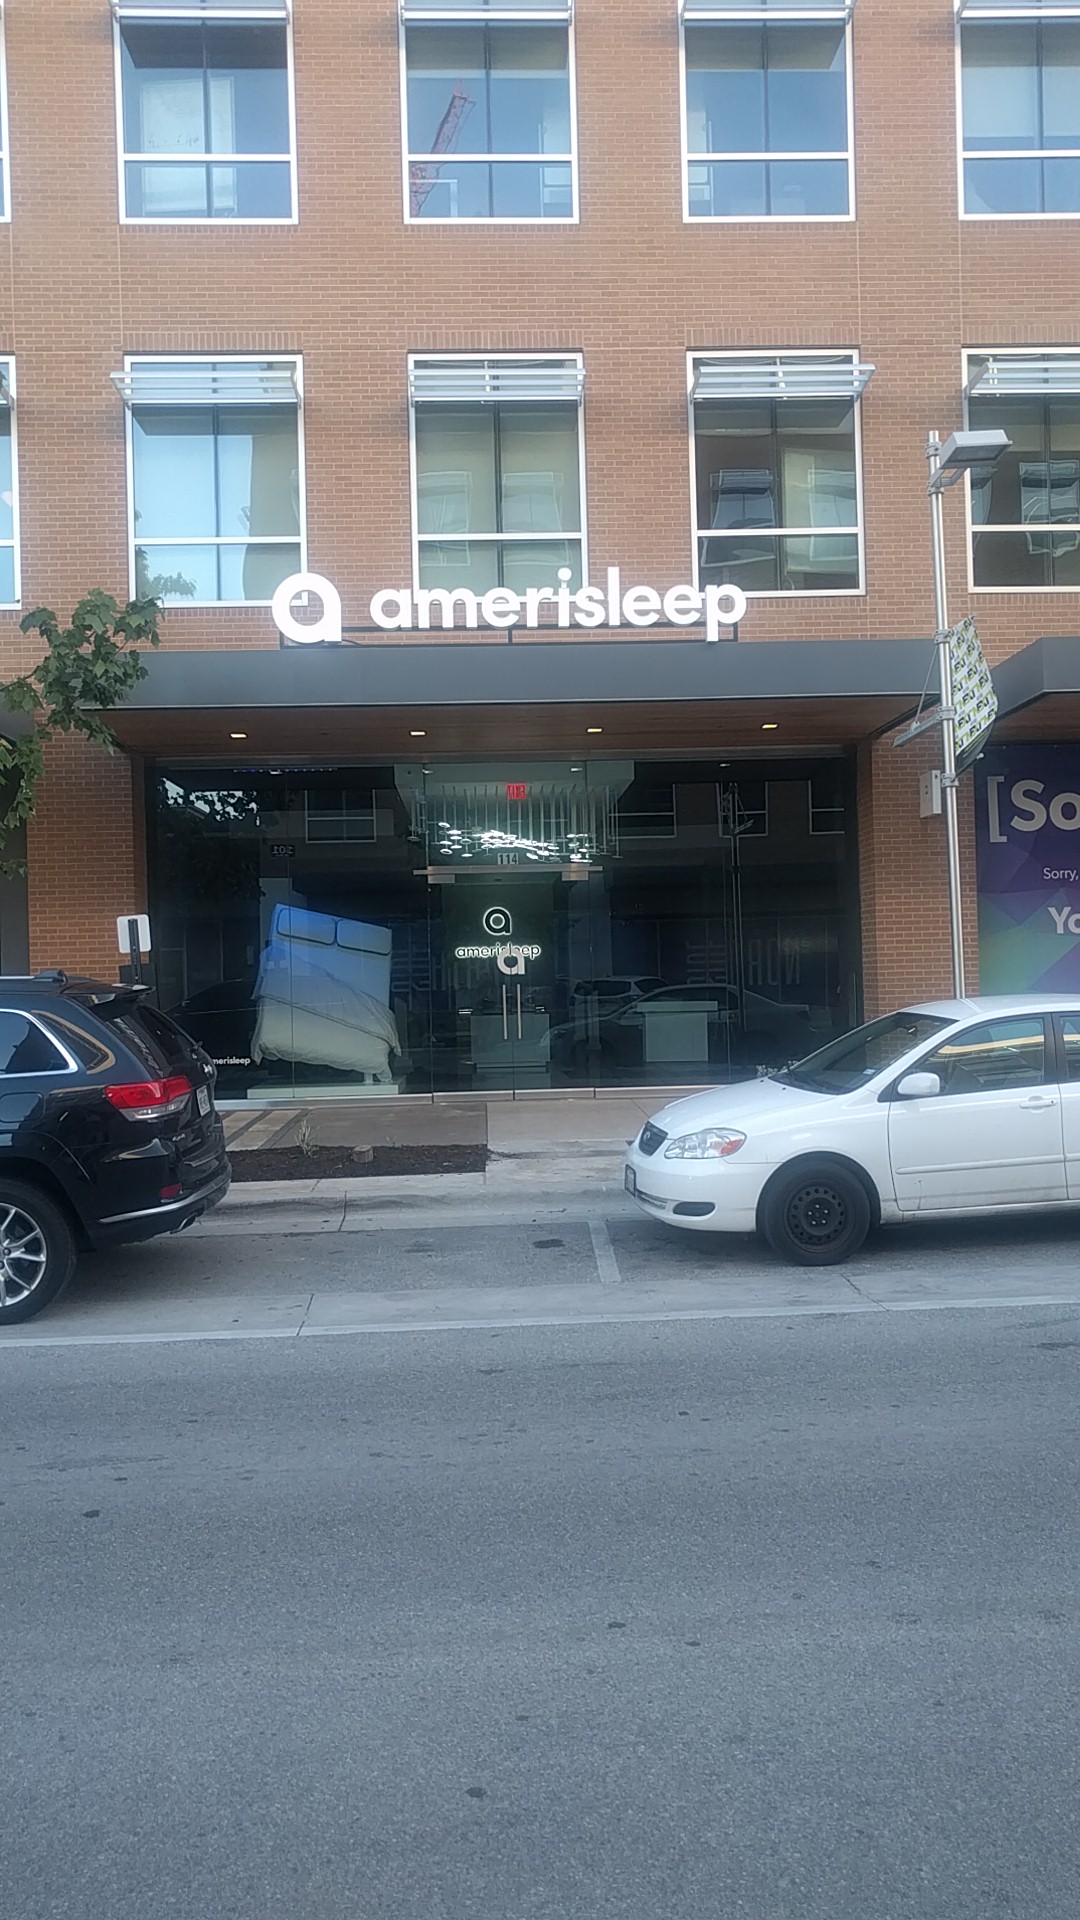 Amerisleep Mattress Store Domain NORTHSIDE, Austin